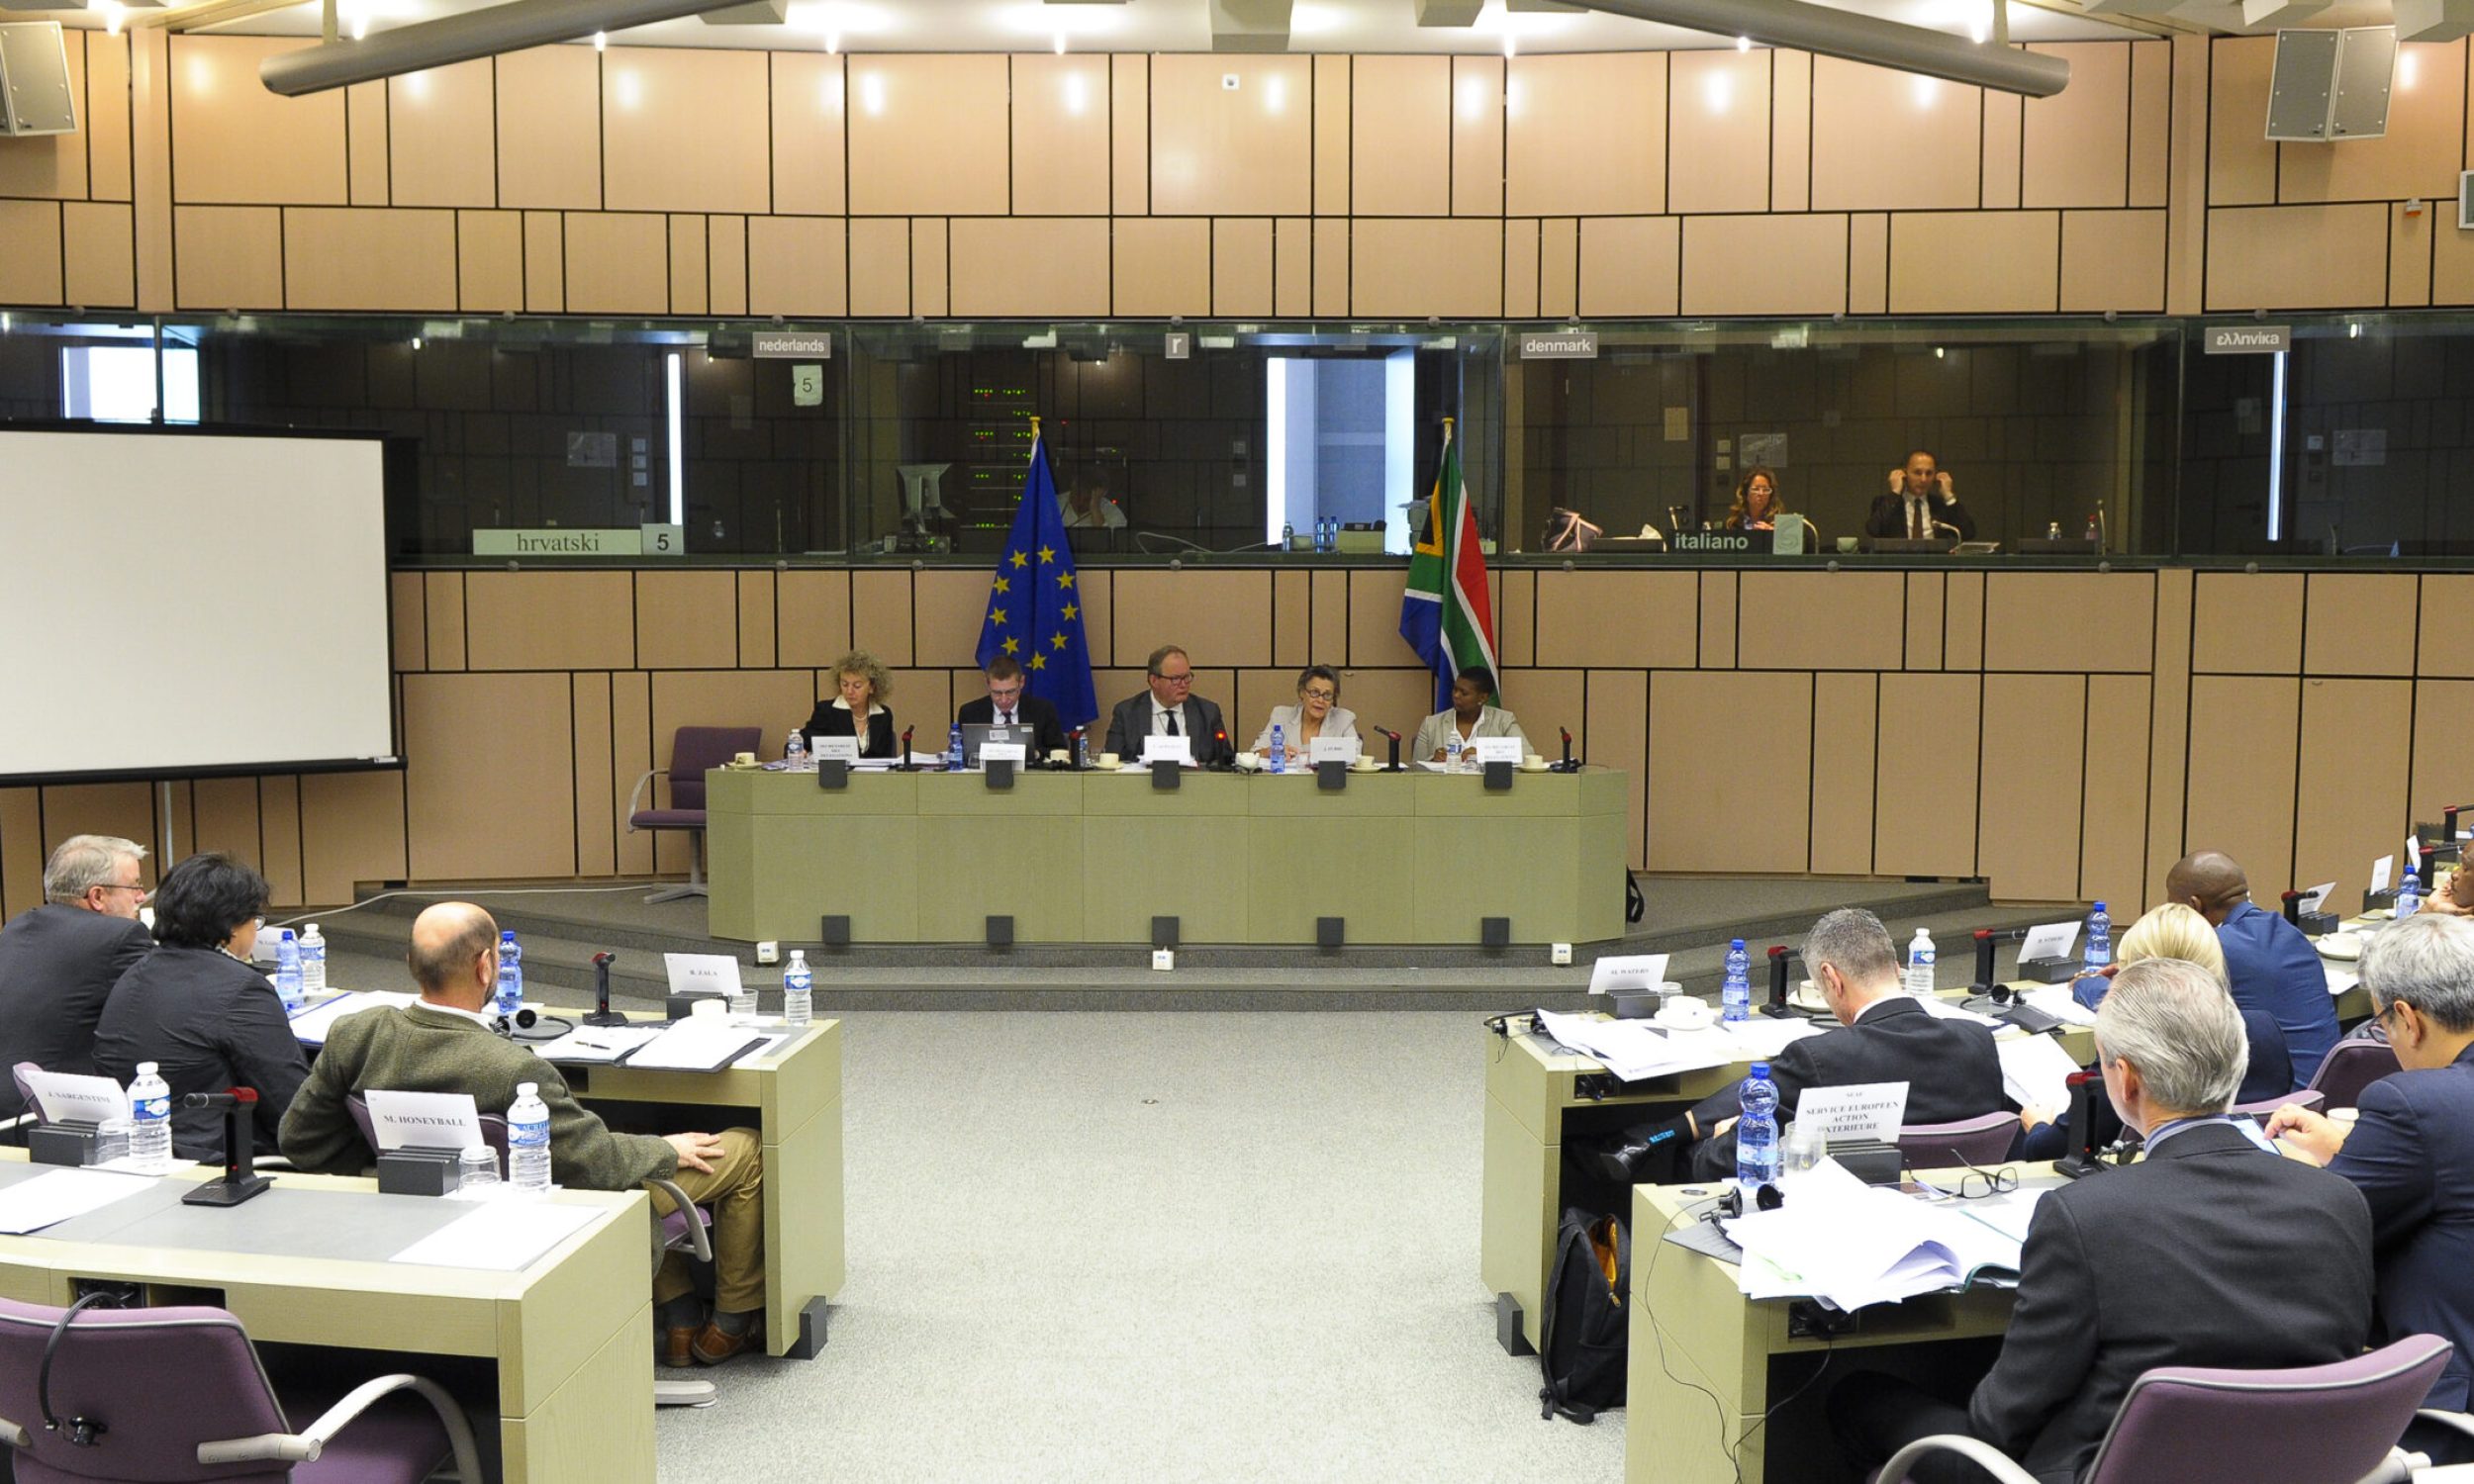 23rd EU-South Africa Interparliamentary meeting